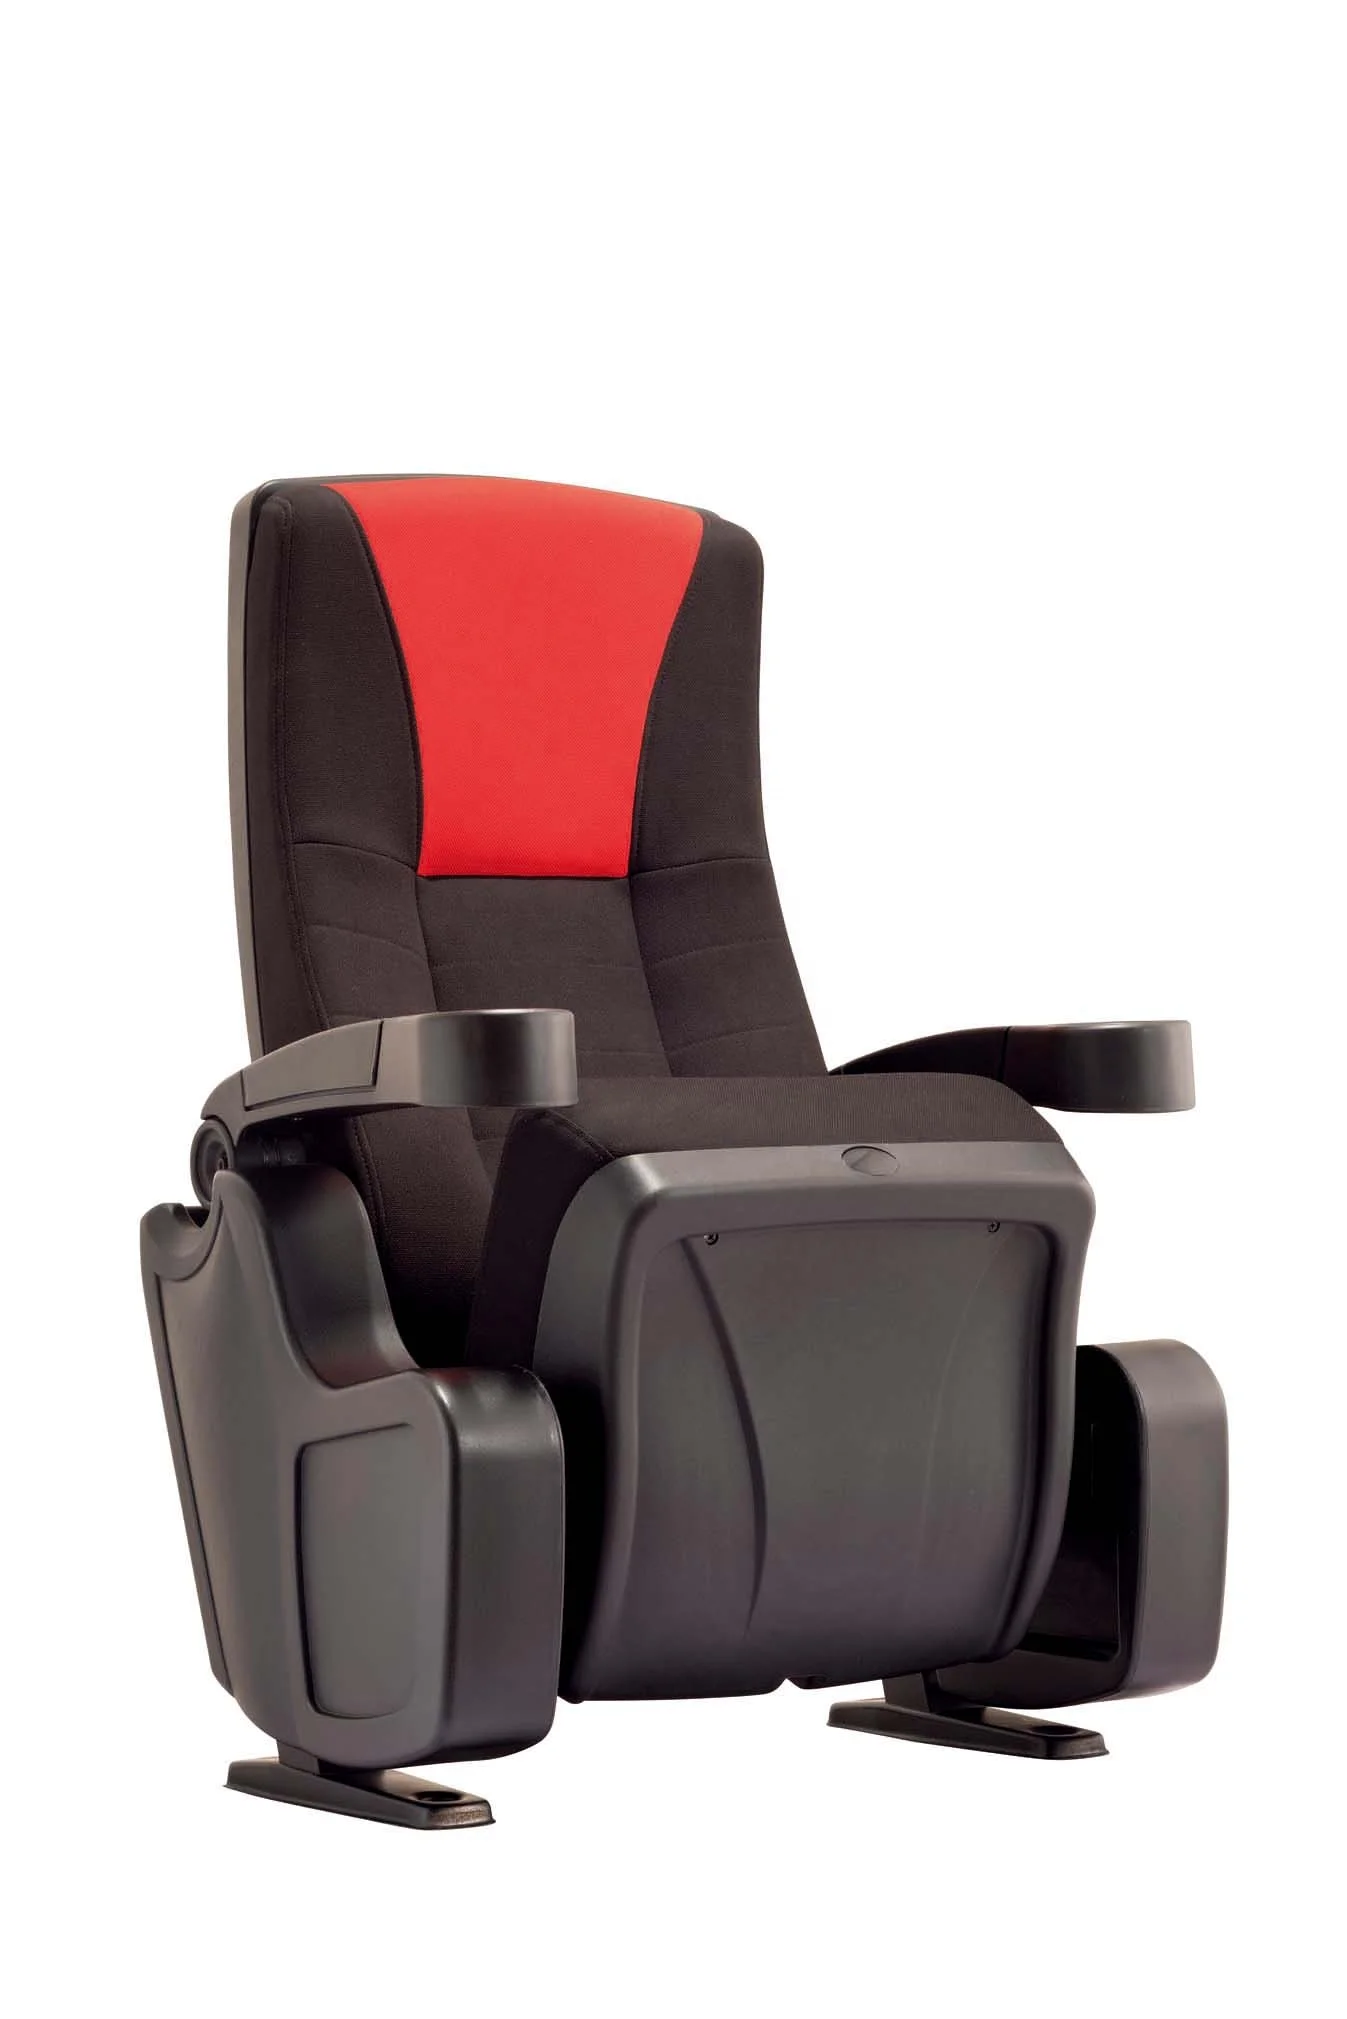 economic 3 seat cinema theater chair  buy cheap theater chaircinema  chairs for salecinema chair product on alibaba